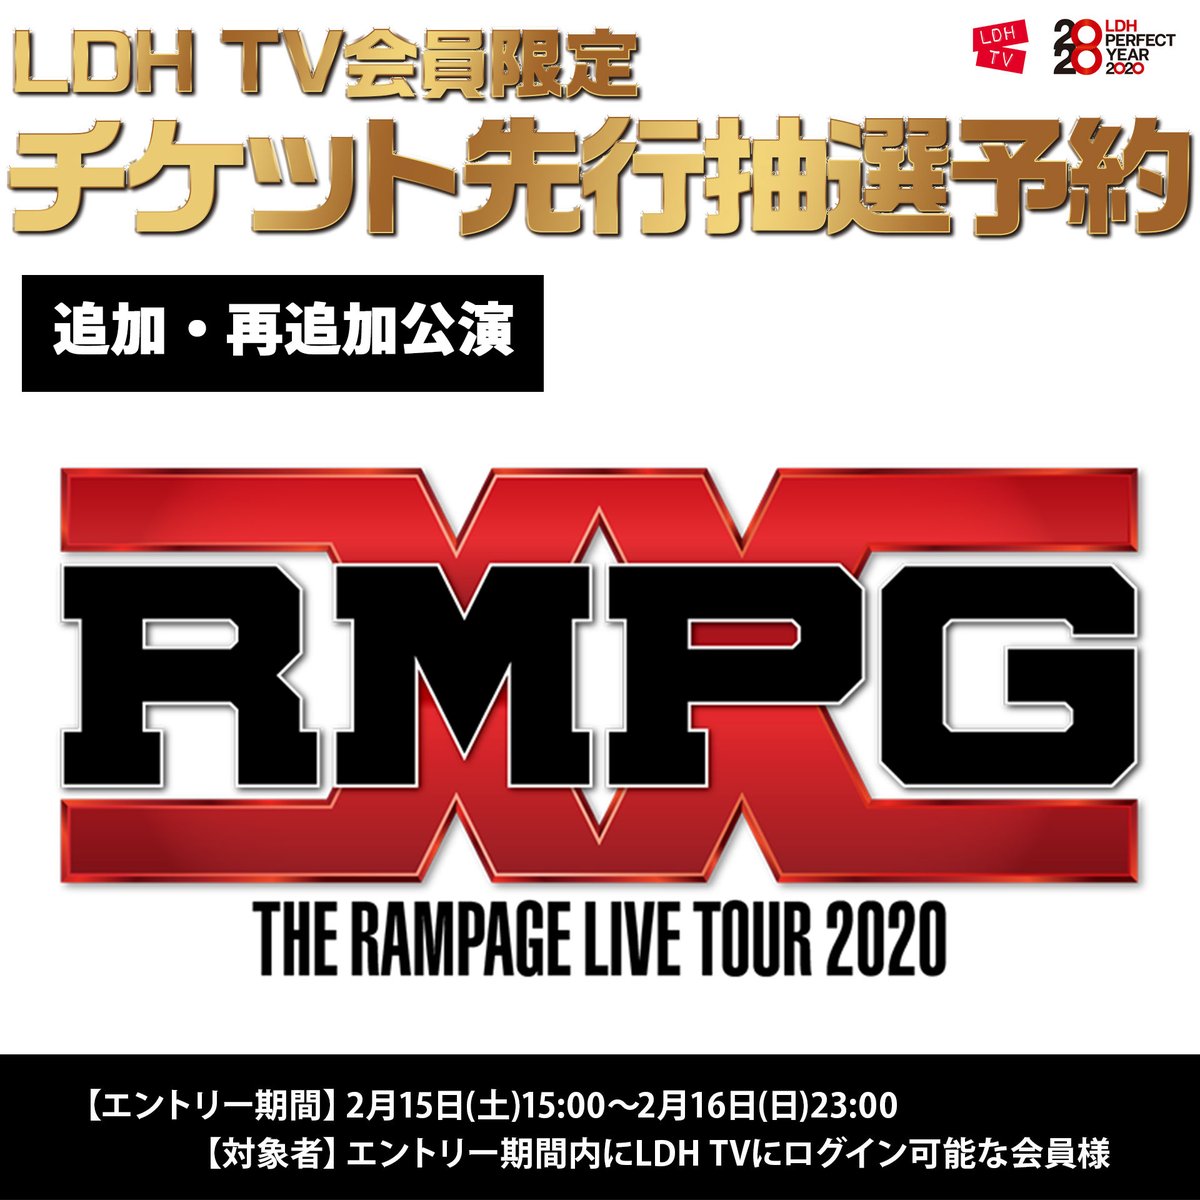 Cl 公式 Ldh Tv会員限定 The Rampage Live Tour Rmpg 追加 再追加公演 Ldh Tvチケット先行抽選予約は2月15日 土 15 00からエントリースタート エントリー期間 2 15 土 15 00 2 16 日 23 00 対象者 エントリー期間内に